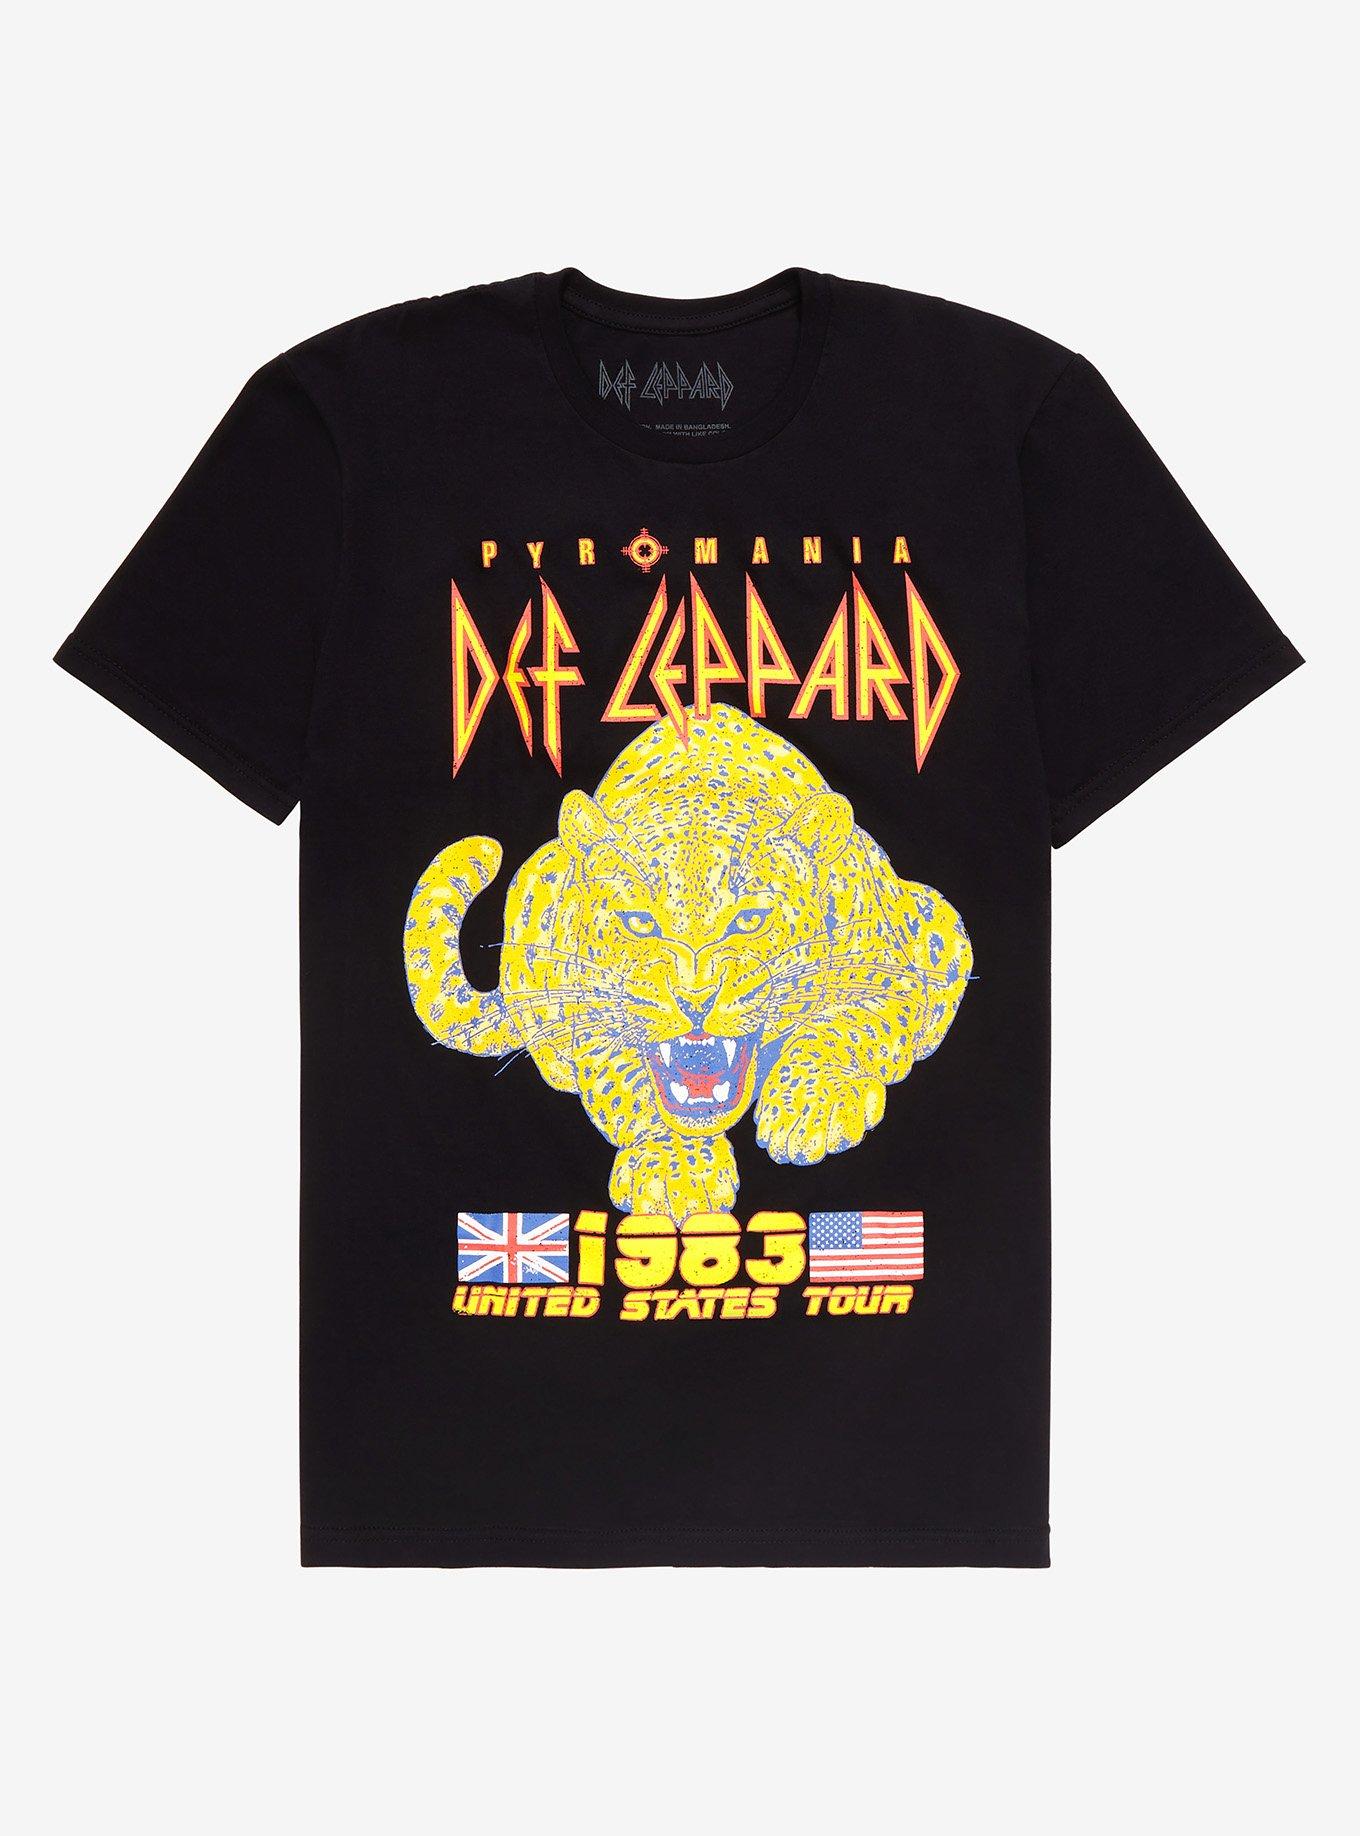 Def Leppard Pyromania 1983 Tour T-Shirt Hot Topic